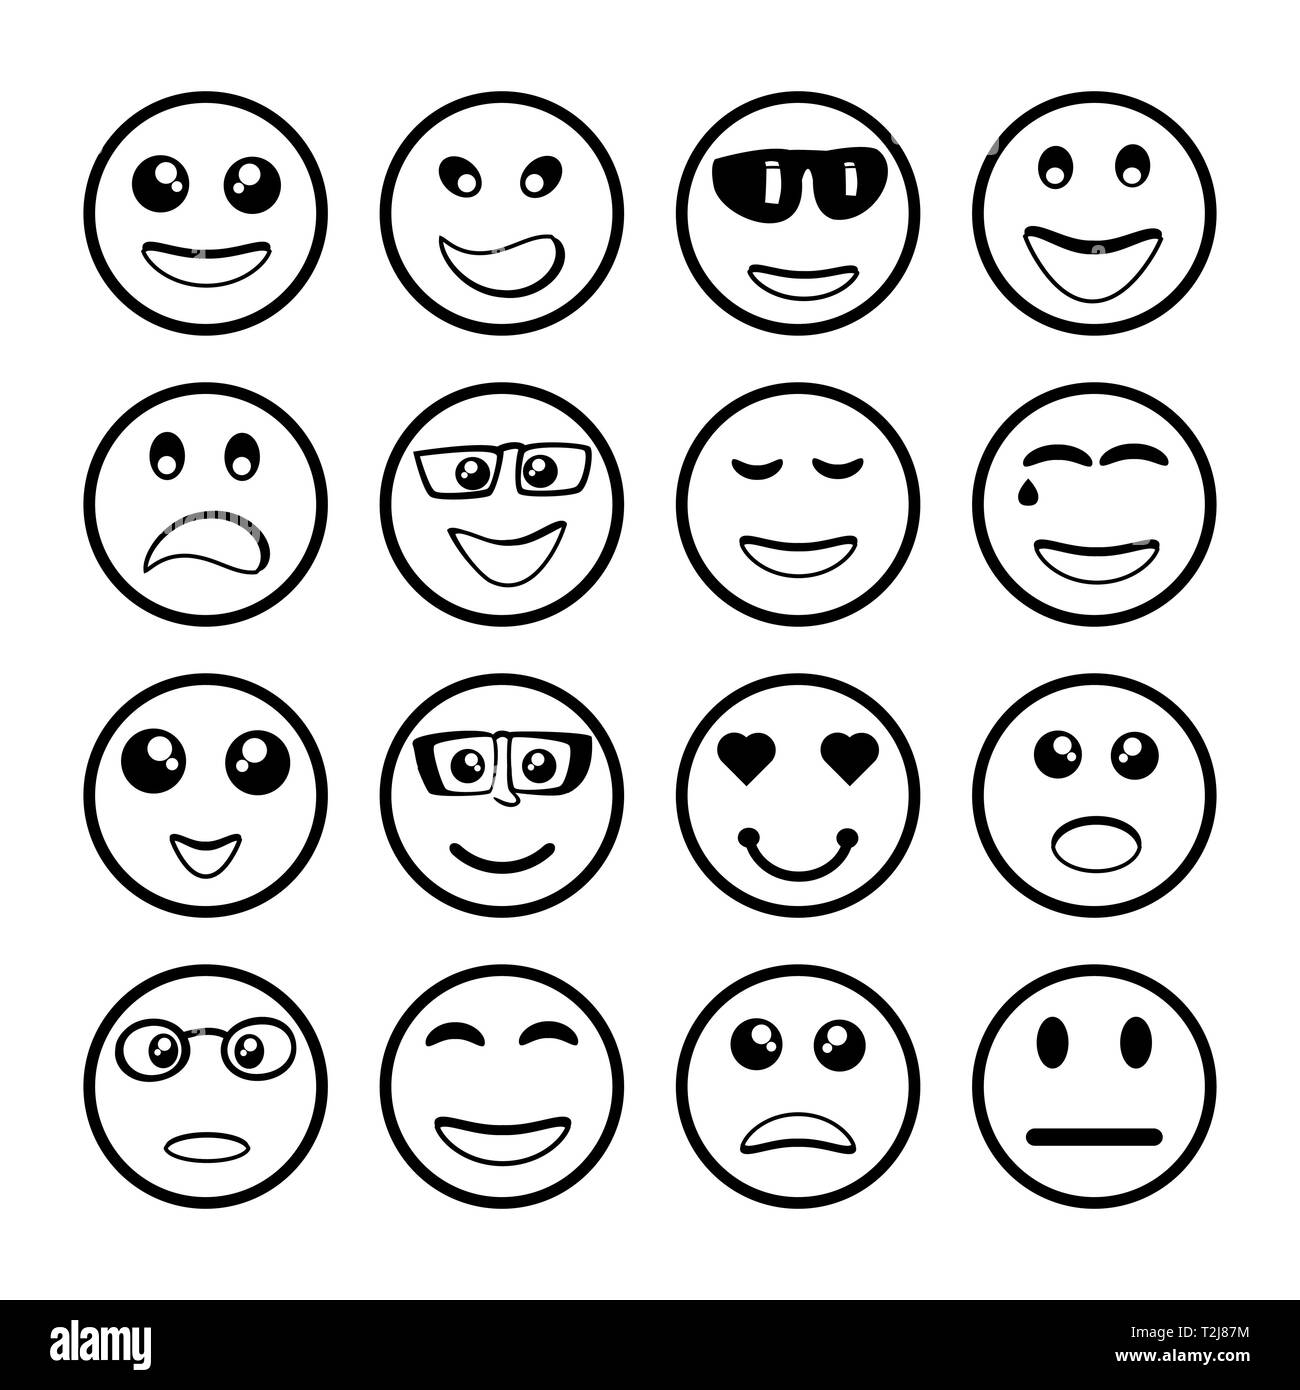 Smile Face Symbole für web design Silhouette eingestellt Stock Vektor